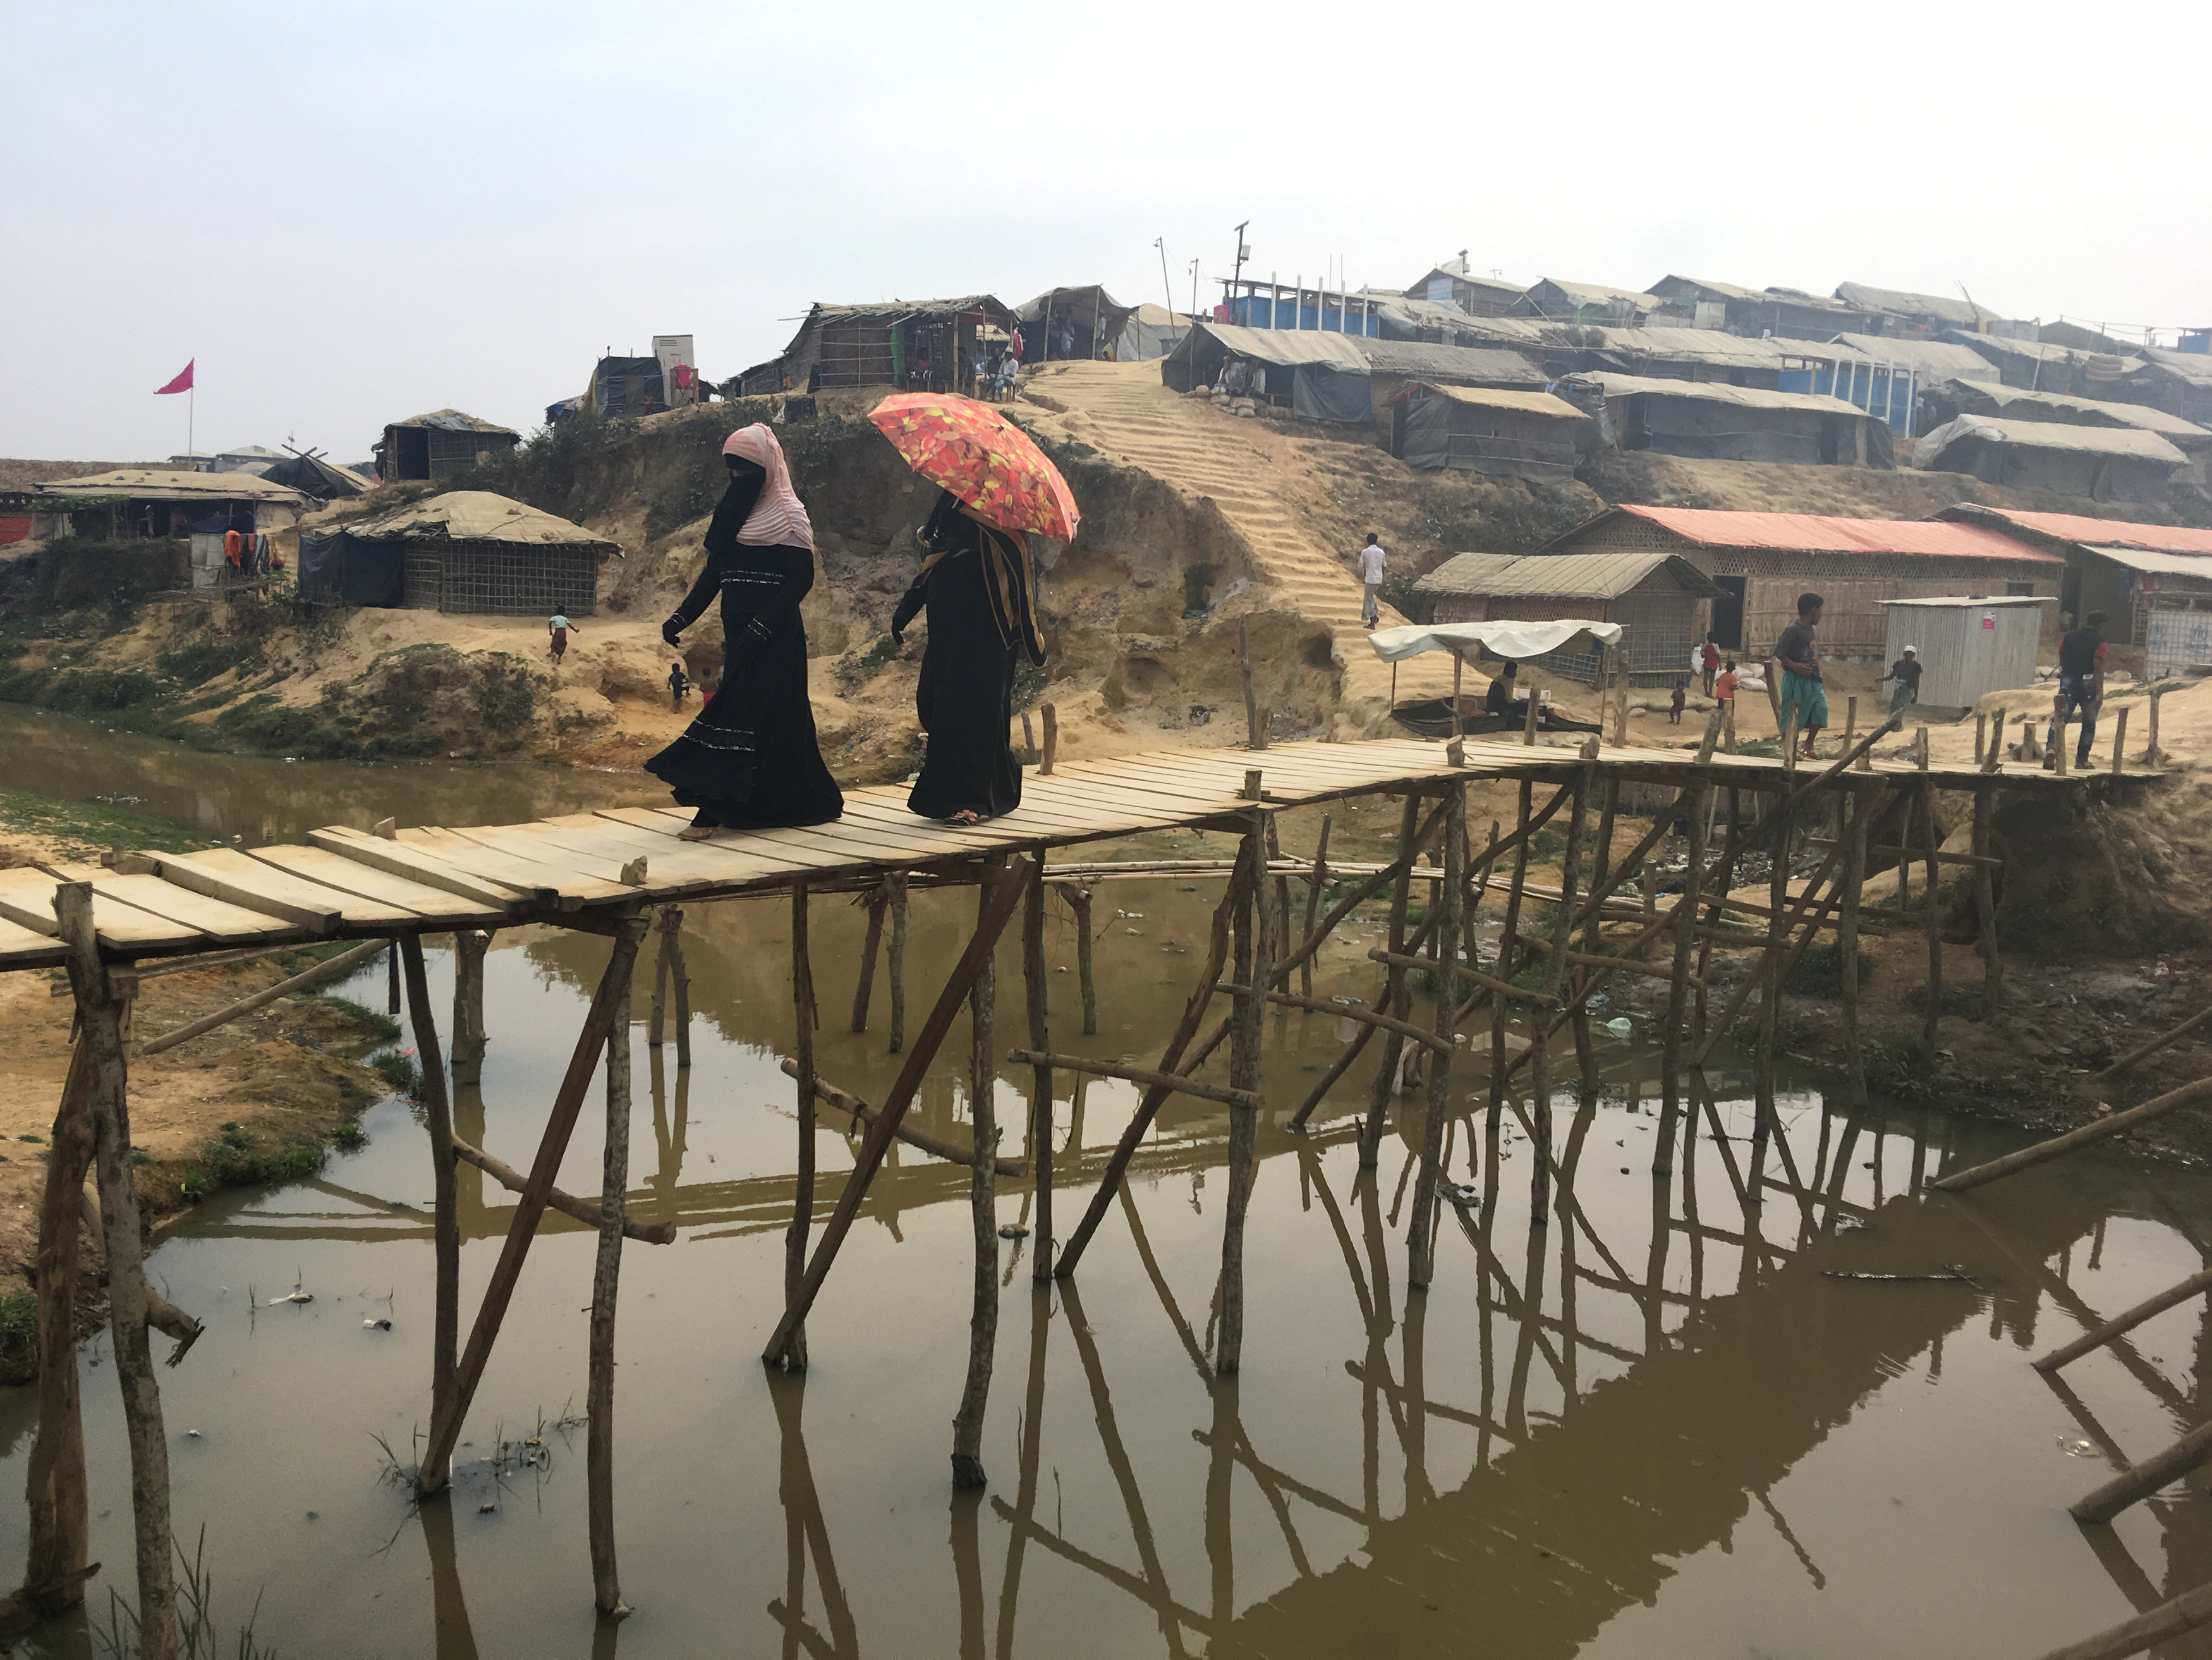 Monsoon floods, landslides threaten 100,000 Rohingya refugees in Bangladesh